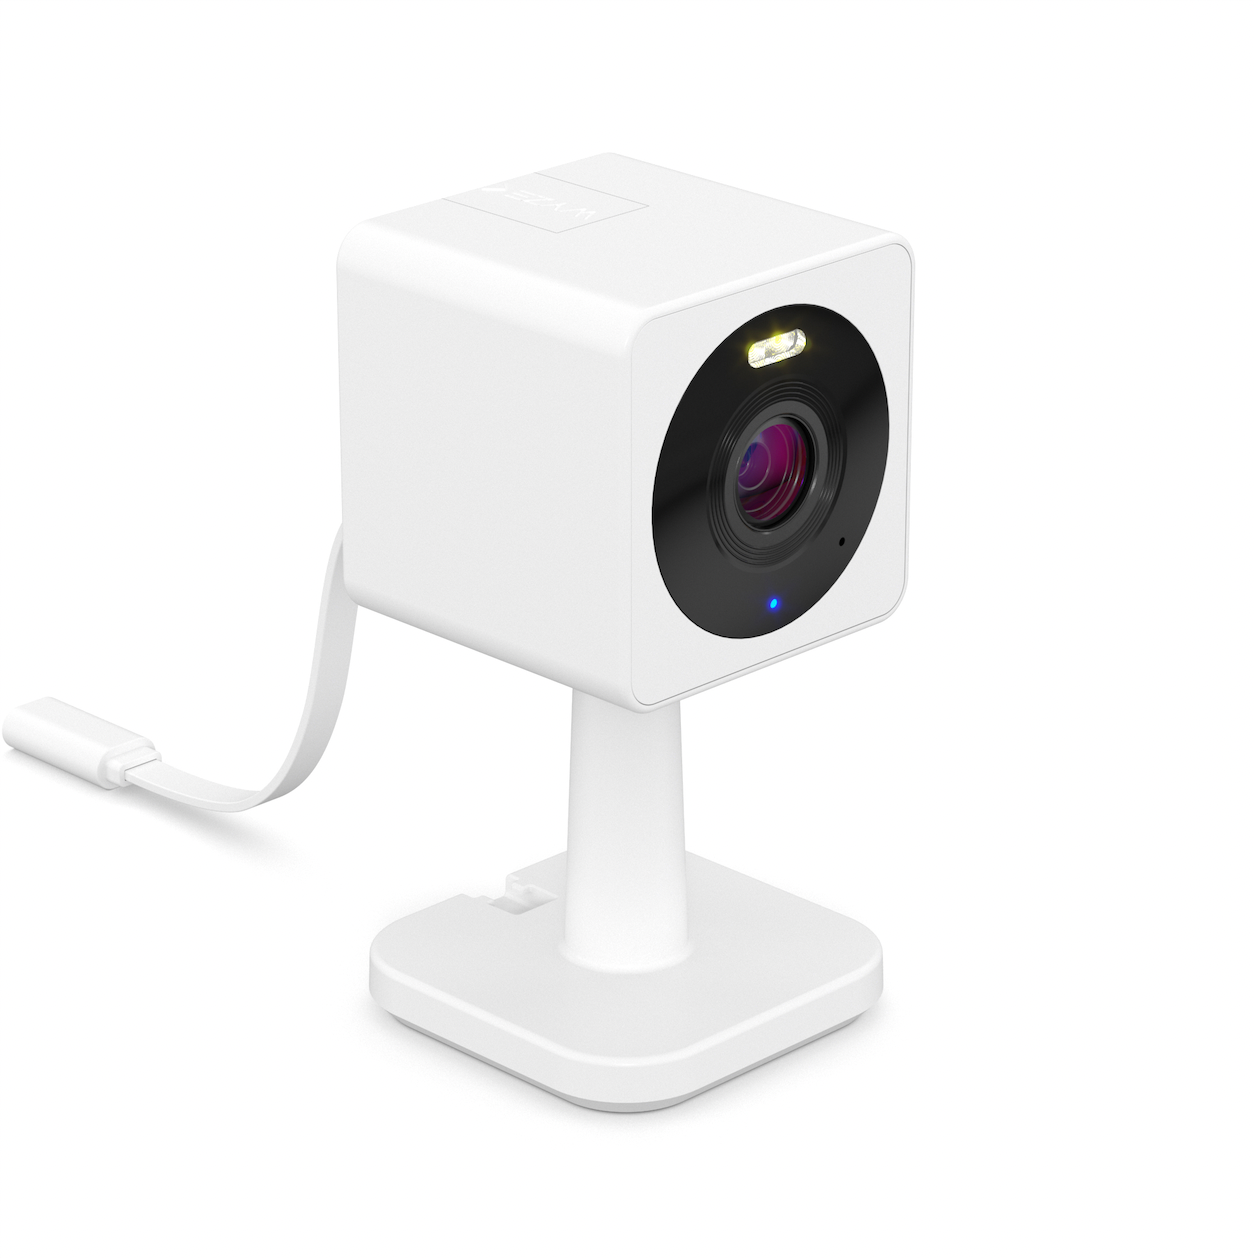 3D render of Wyze Cam OG security camera against a white background.